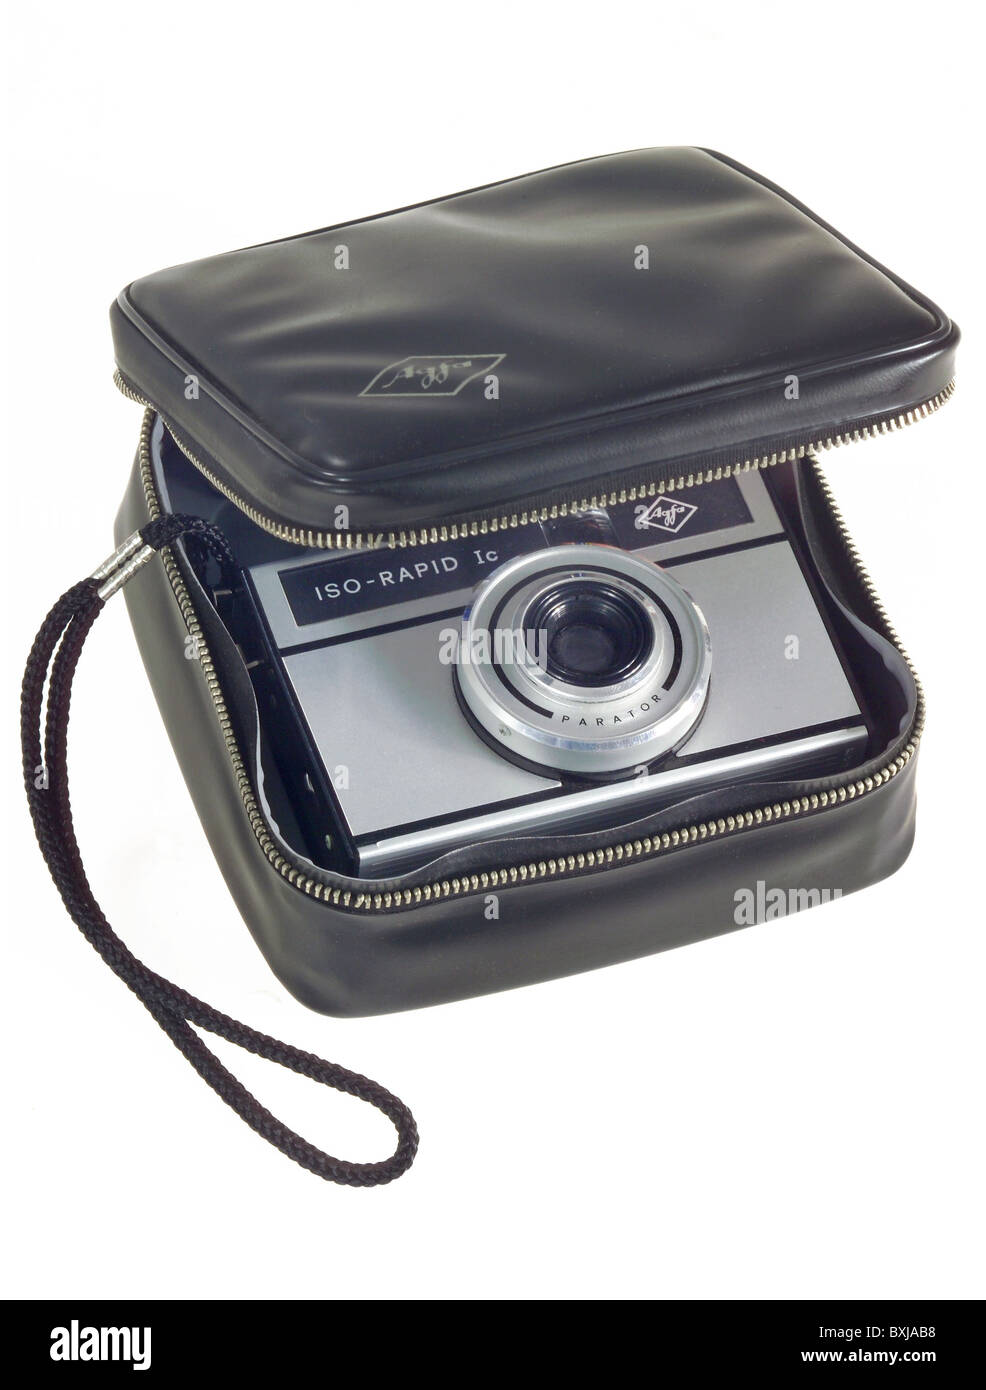 Photographie, appareils photo, film 35 mm, Agfa ISO Rapid IC, Allemagne, 1965, droits supplémentaires-Clearences-non disponible Banque D'Images